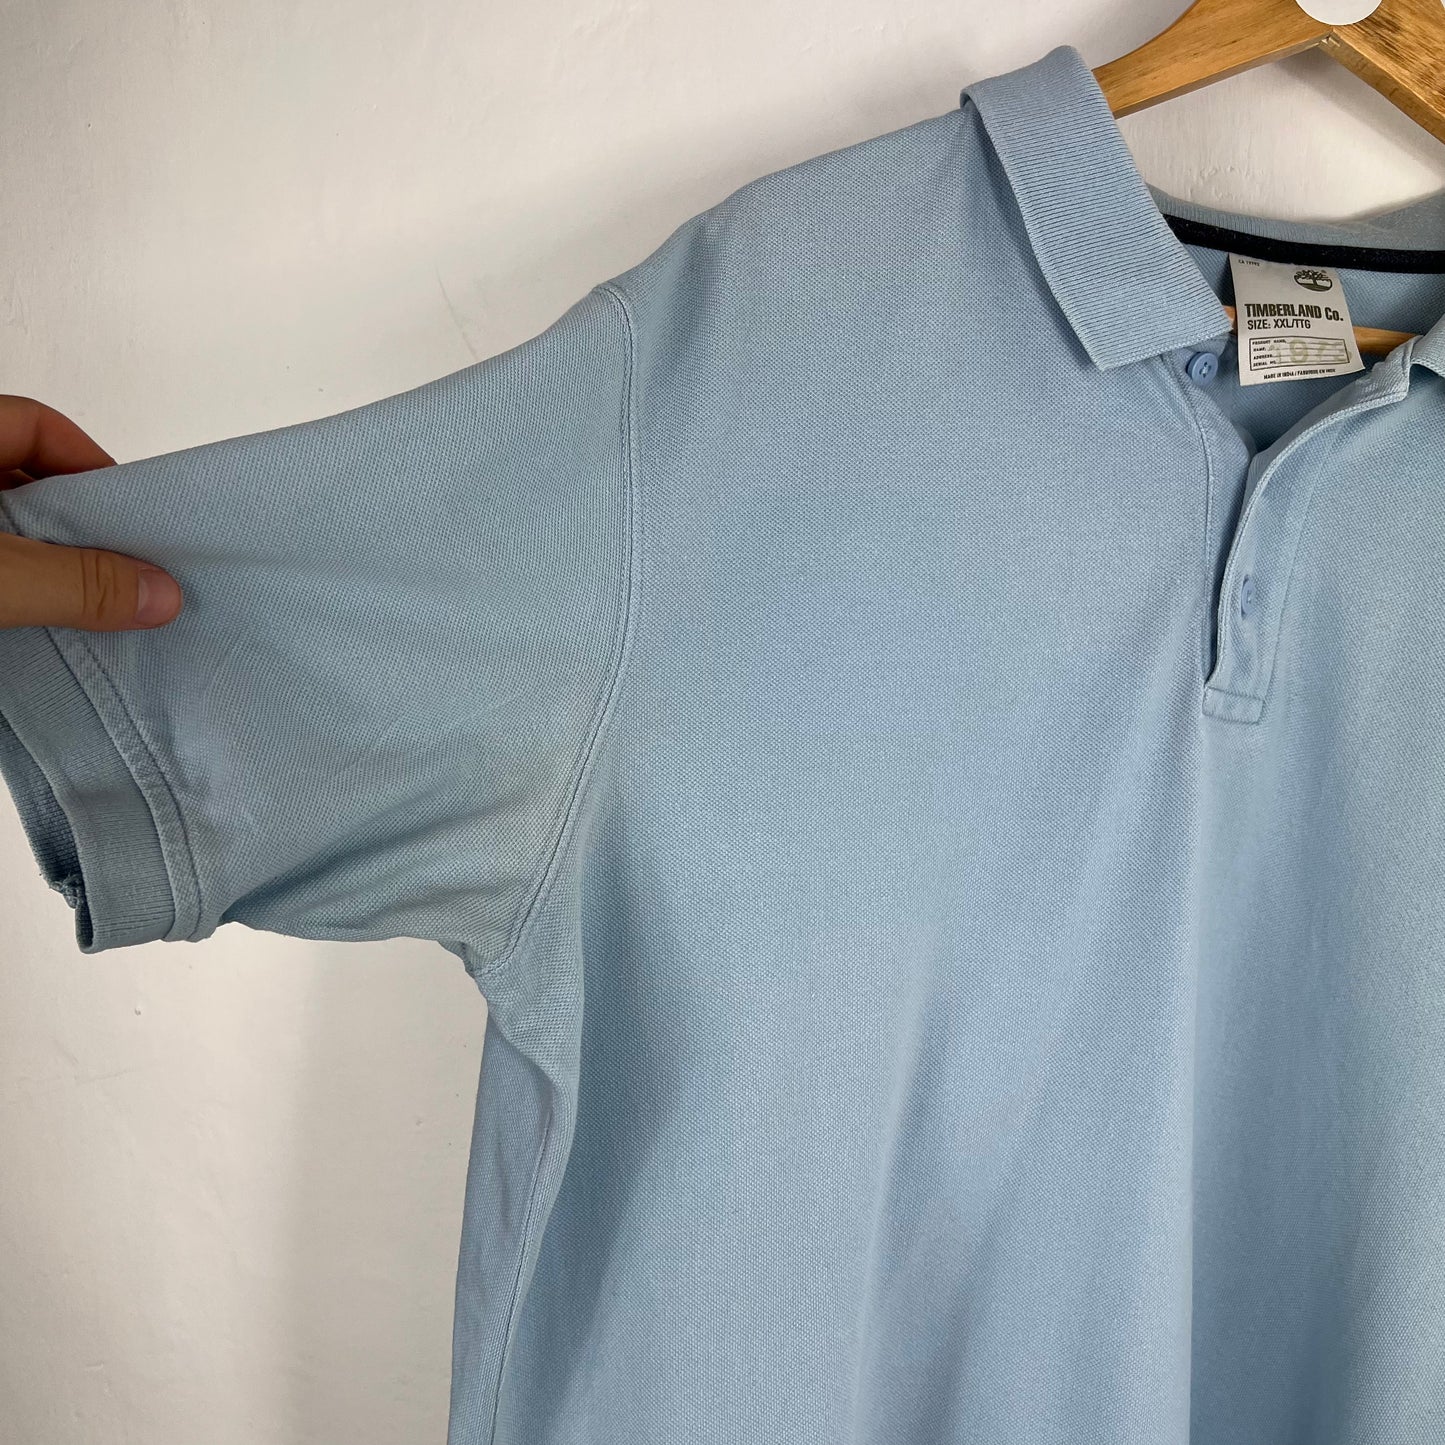 Timberland polo shirt blue XL